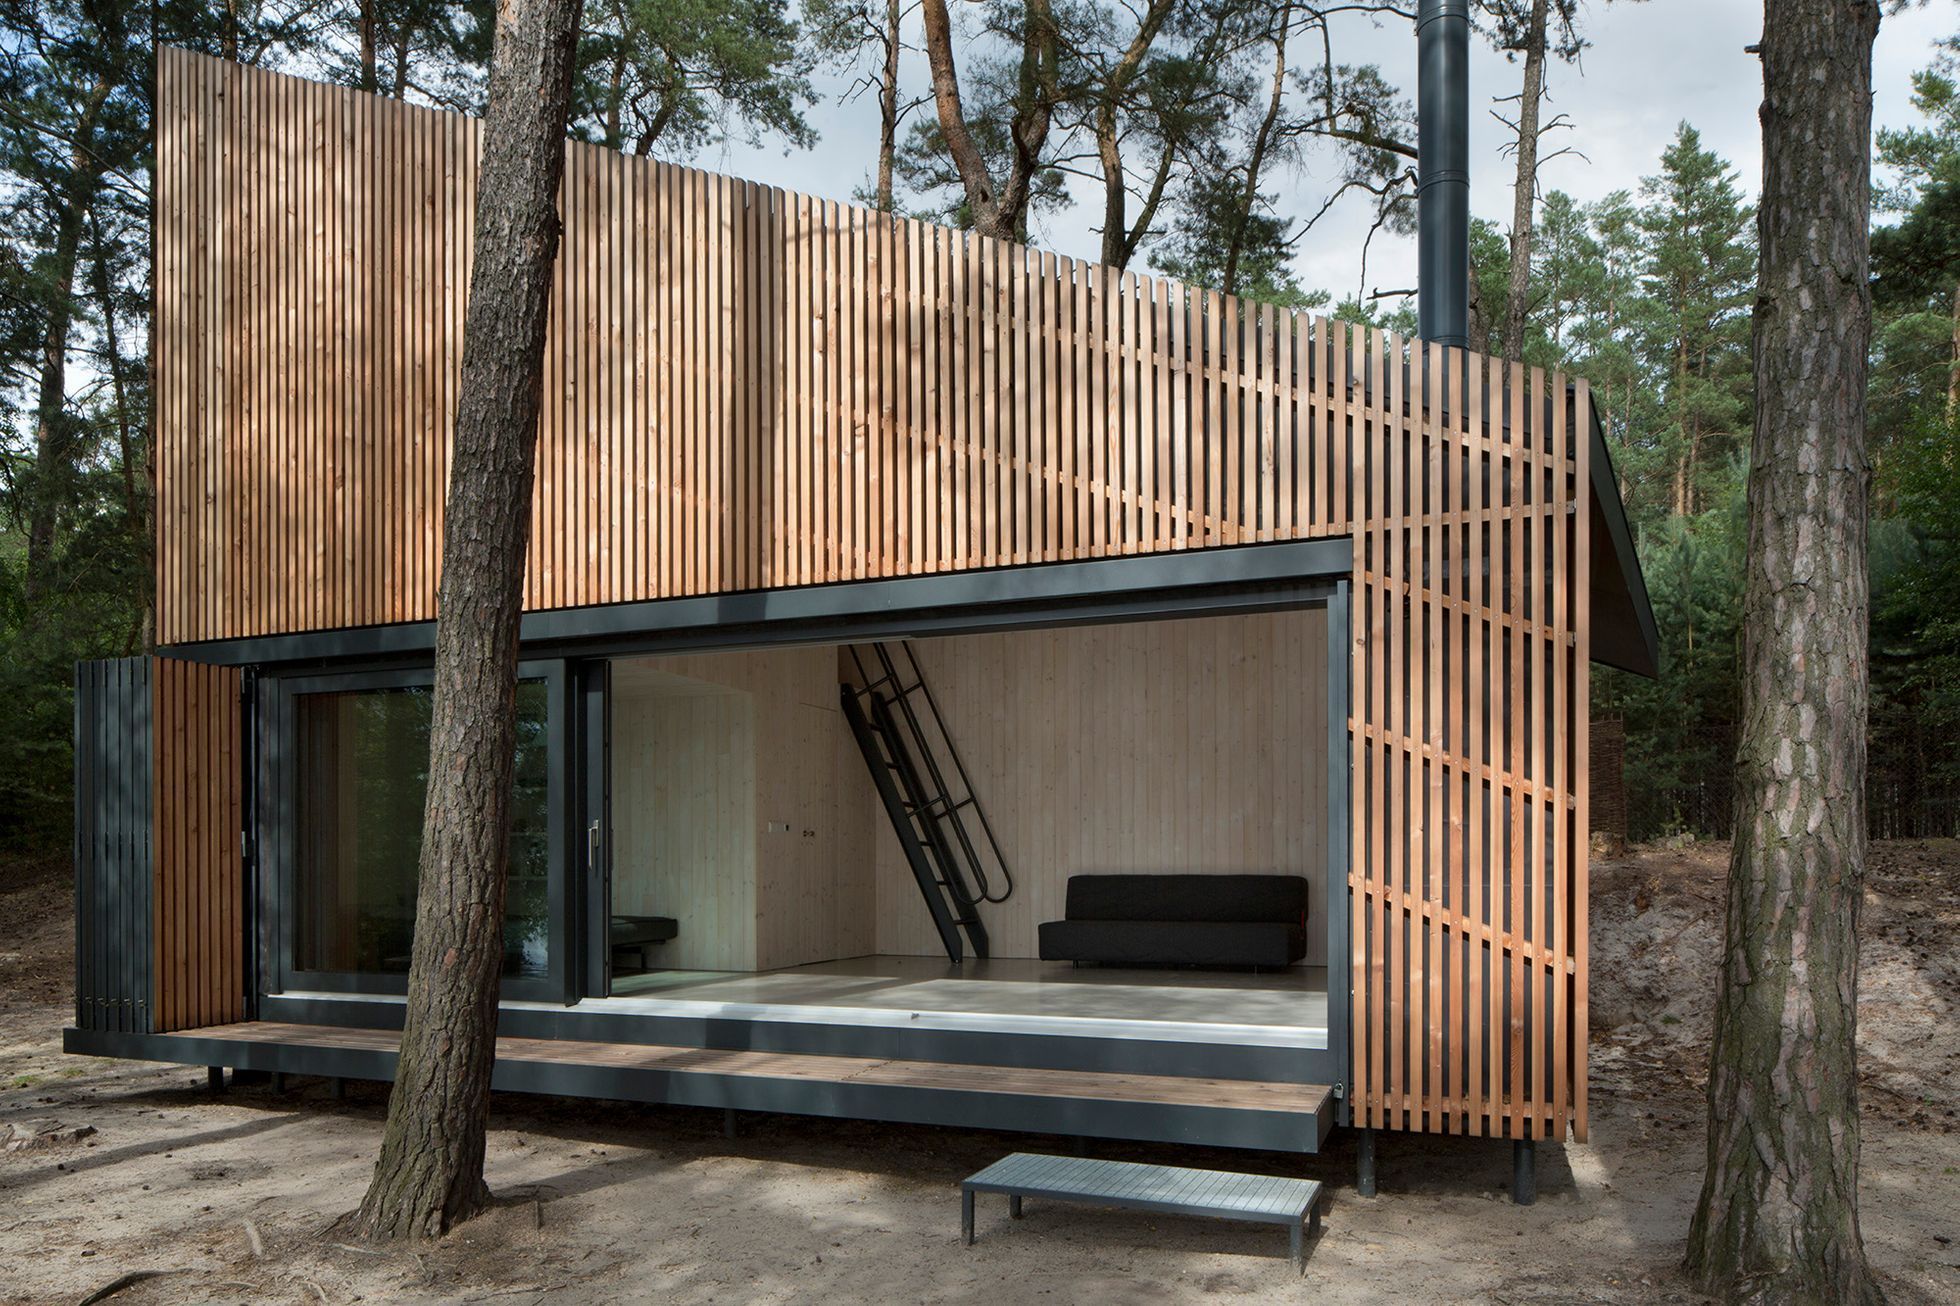 Chata u jezera, Doksy / FAM Architekti (2014)